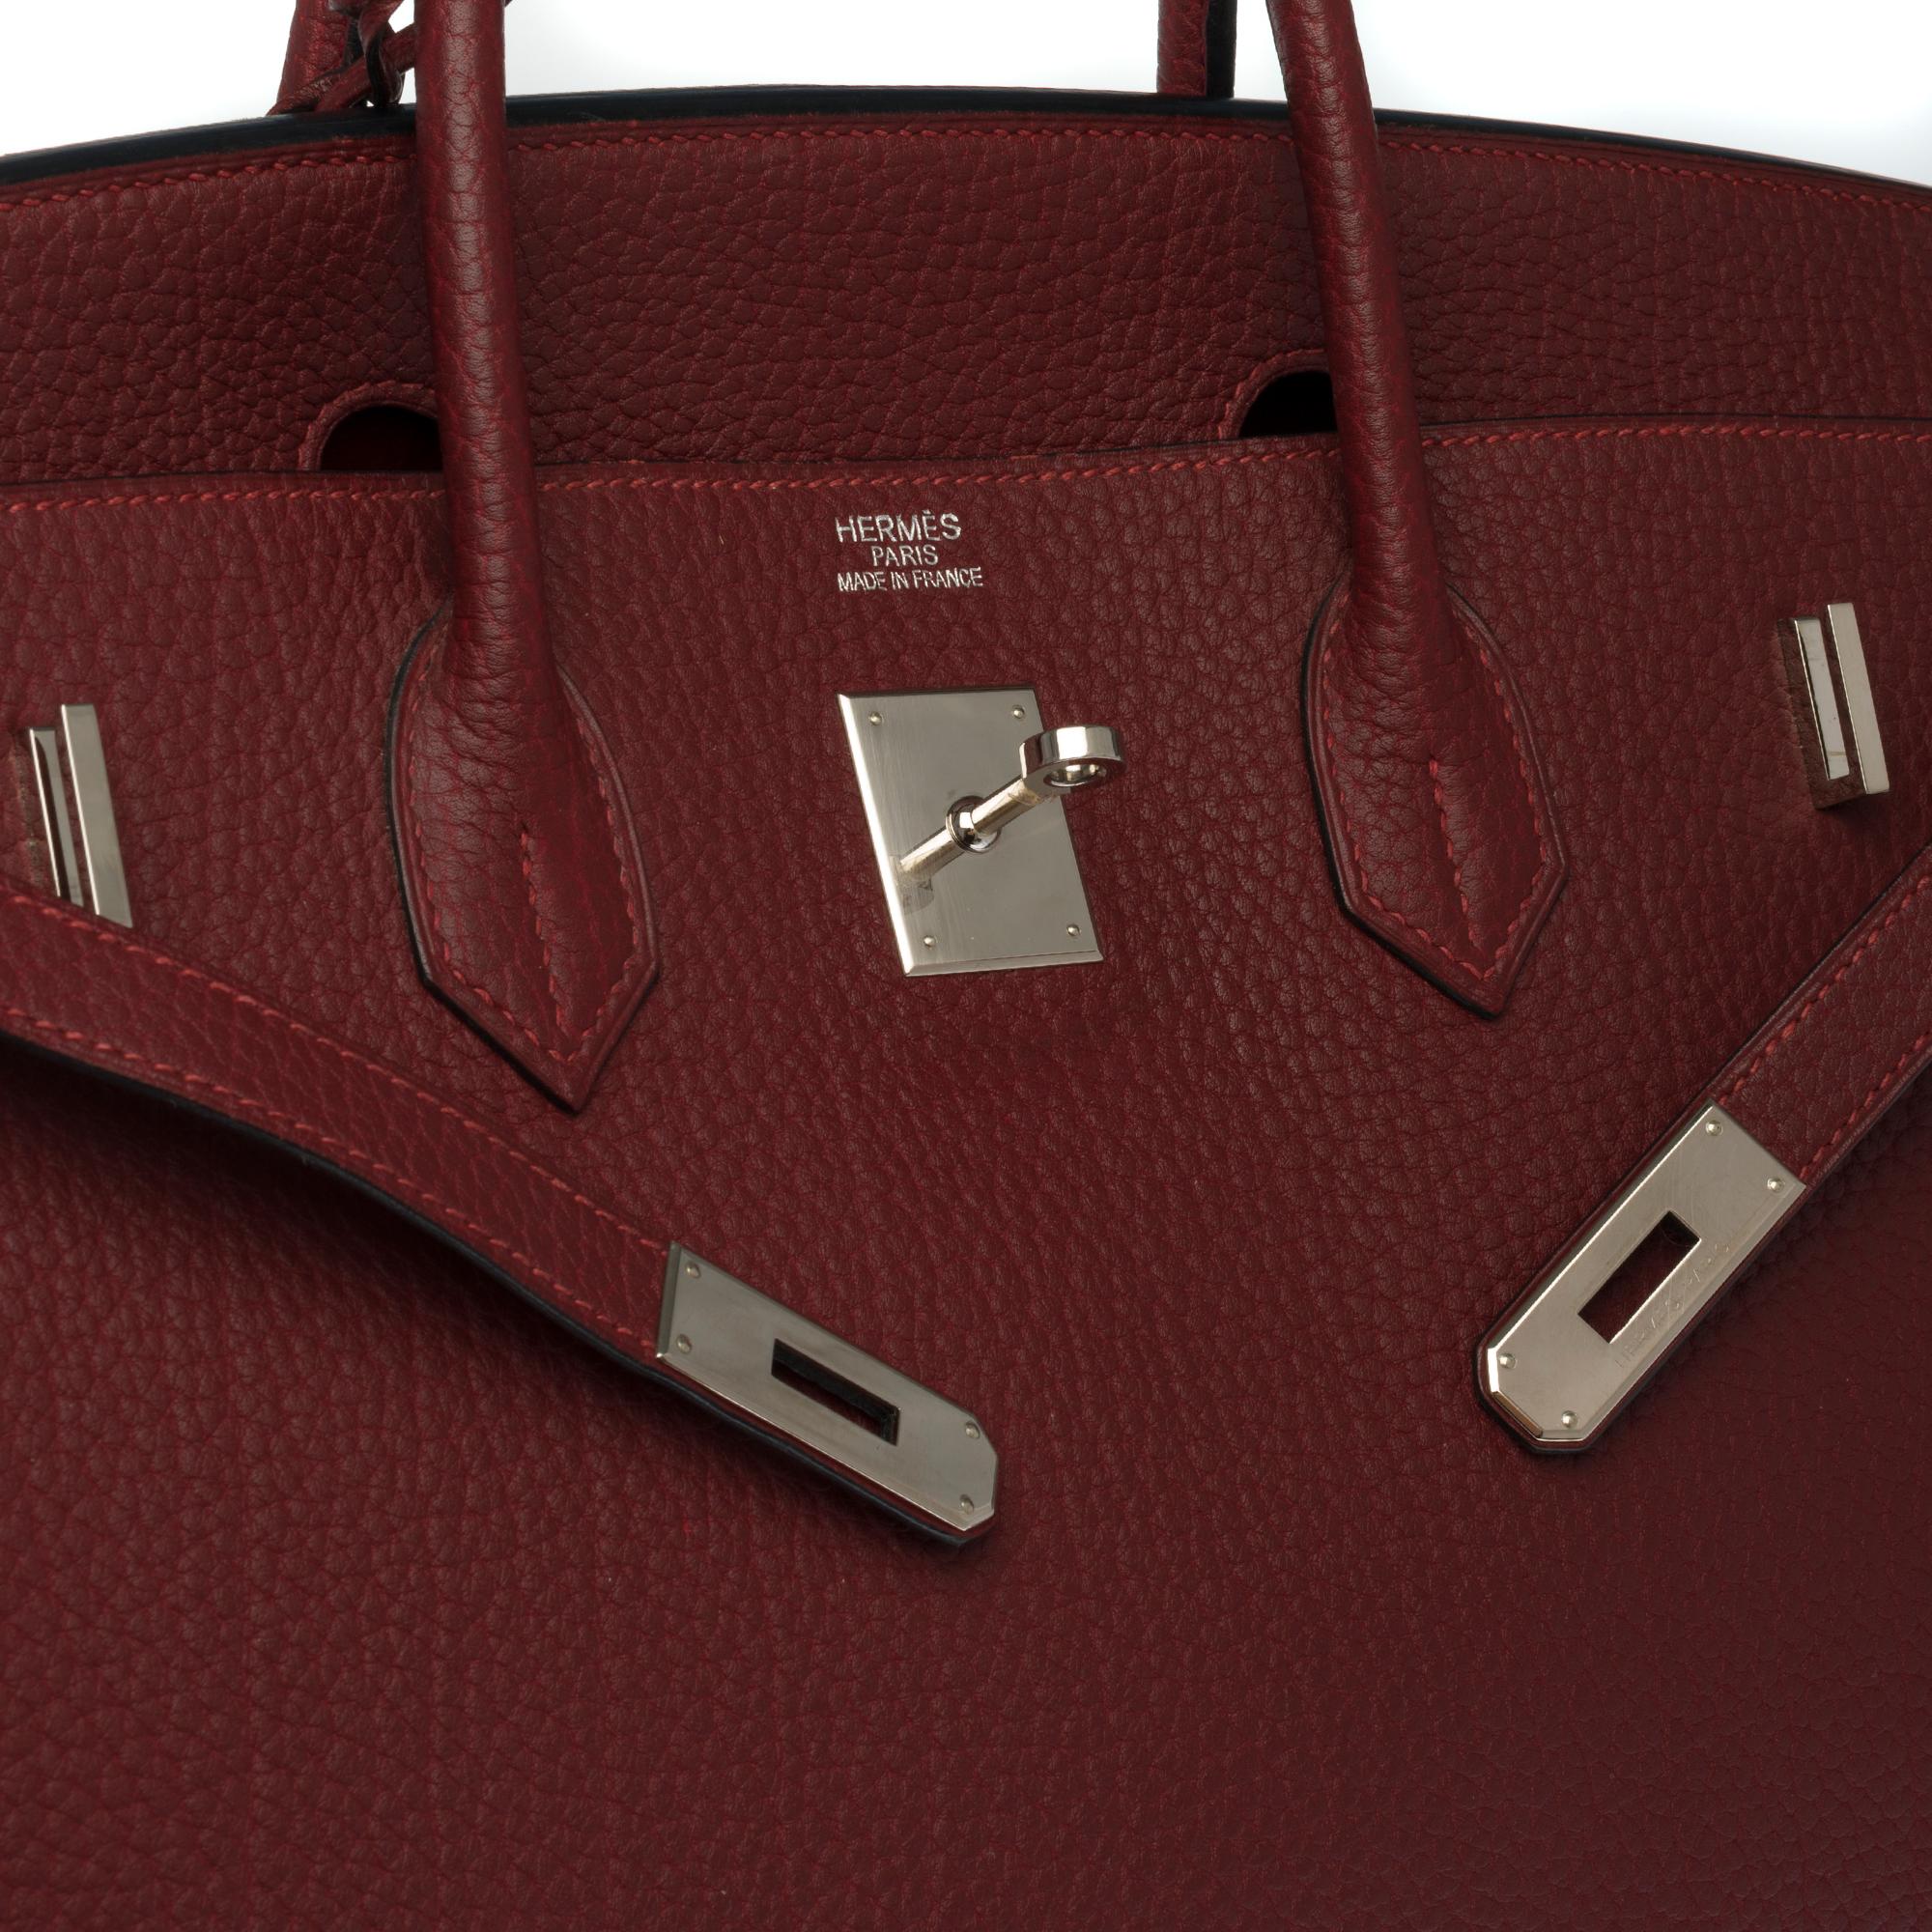 Women's or Men's Stunning Hermes Birkin 40cm handbag in burgundy Fjord leather, silver hardware